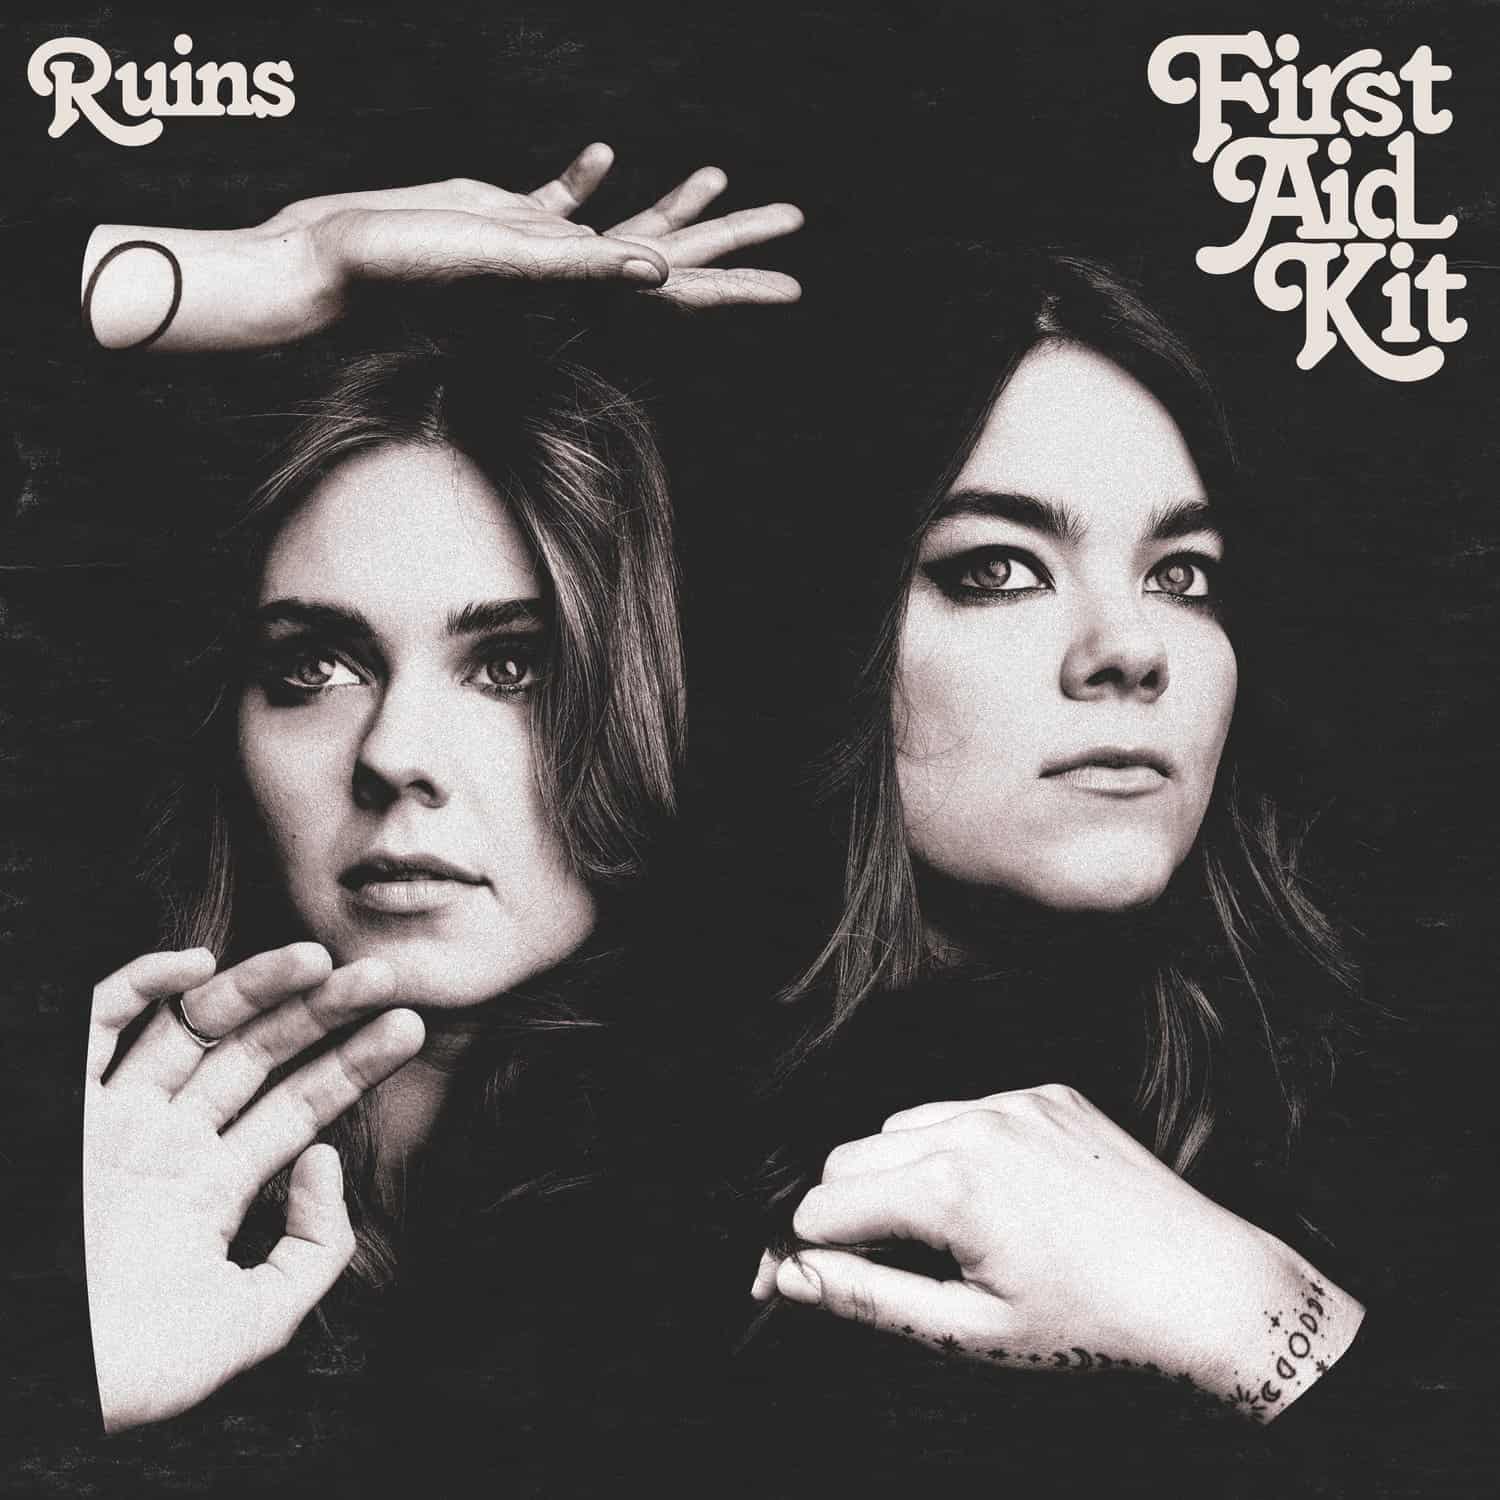 First-Aid-Kit-Ruins-LP-vinyl-record-album-front